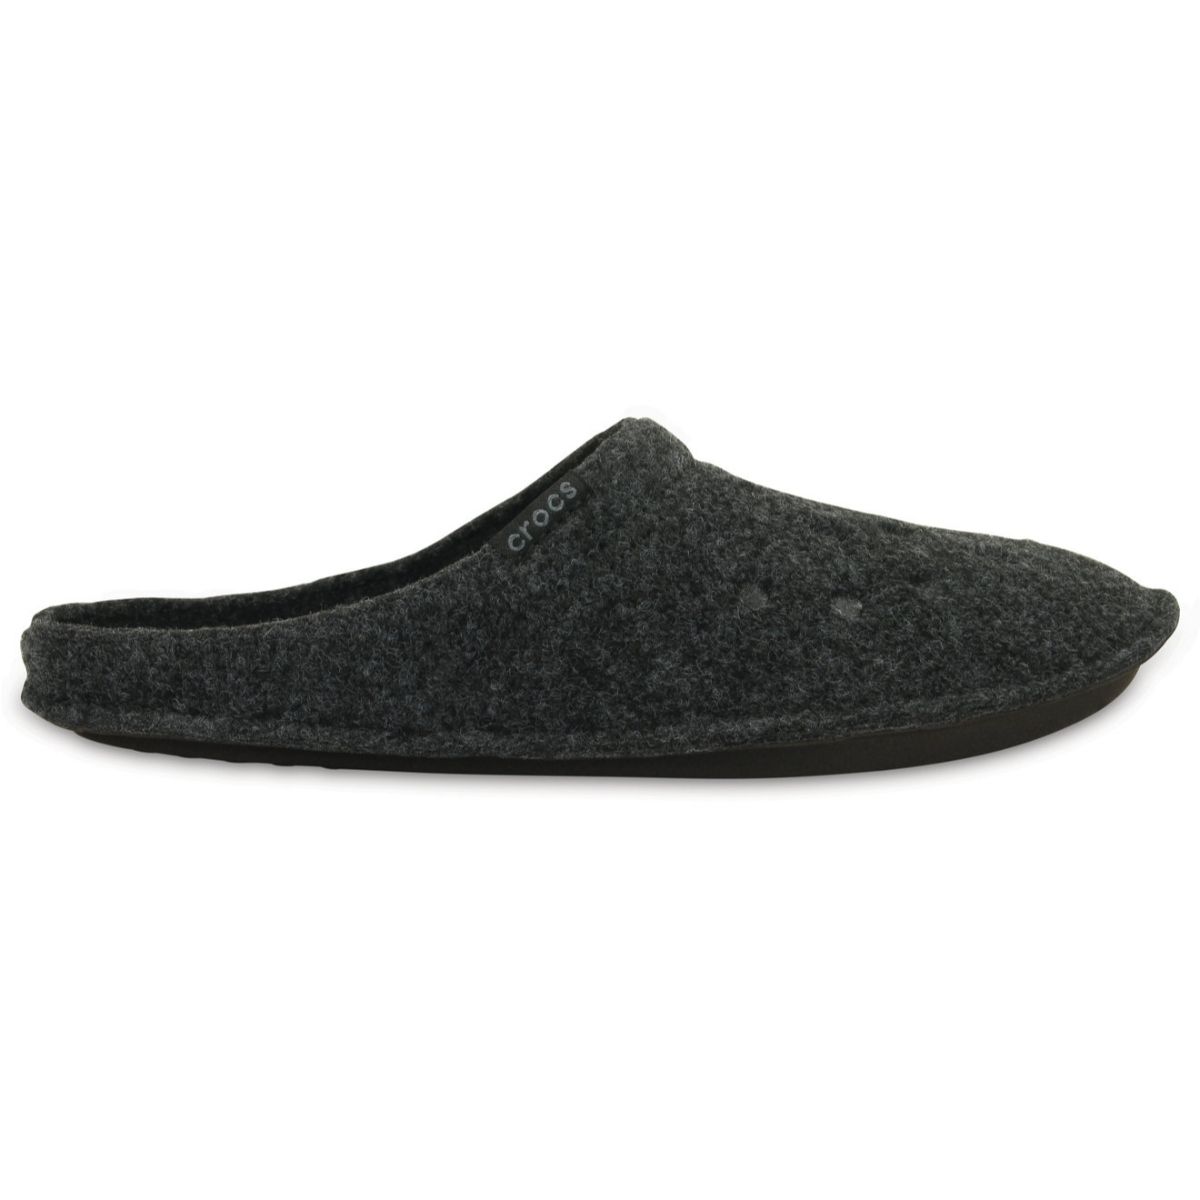 Share 210+ classic slipper crocs latest